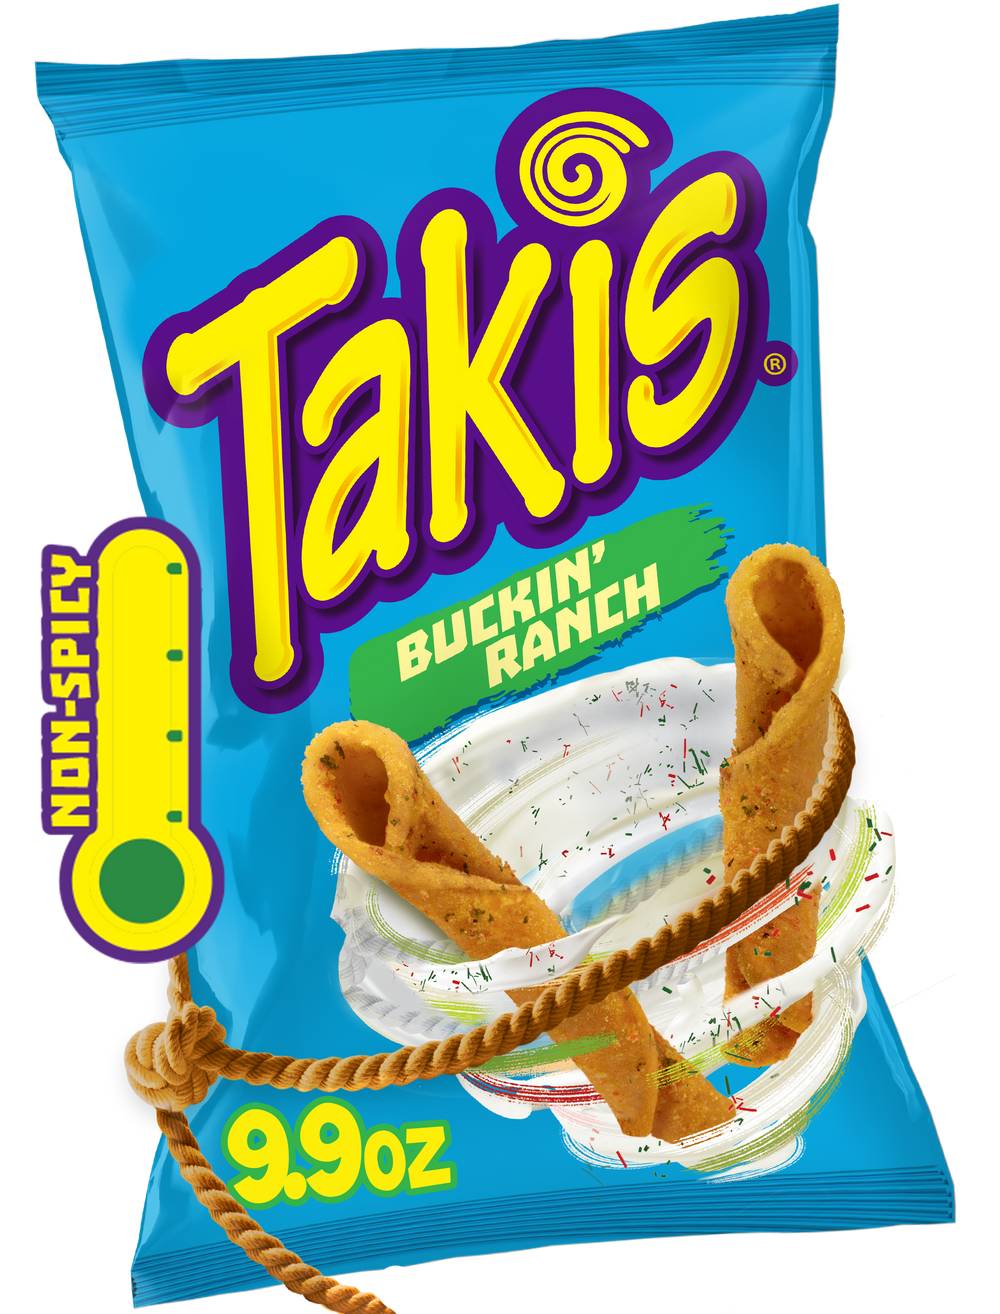 Takis Non-Spicy Zesty Rolled Tortilla Chips (buckin’ ranch)